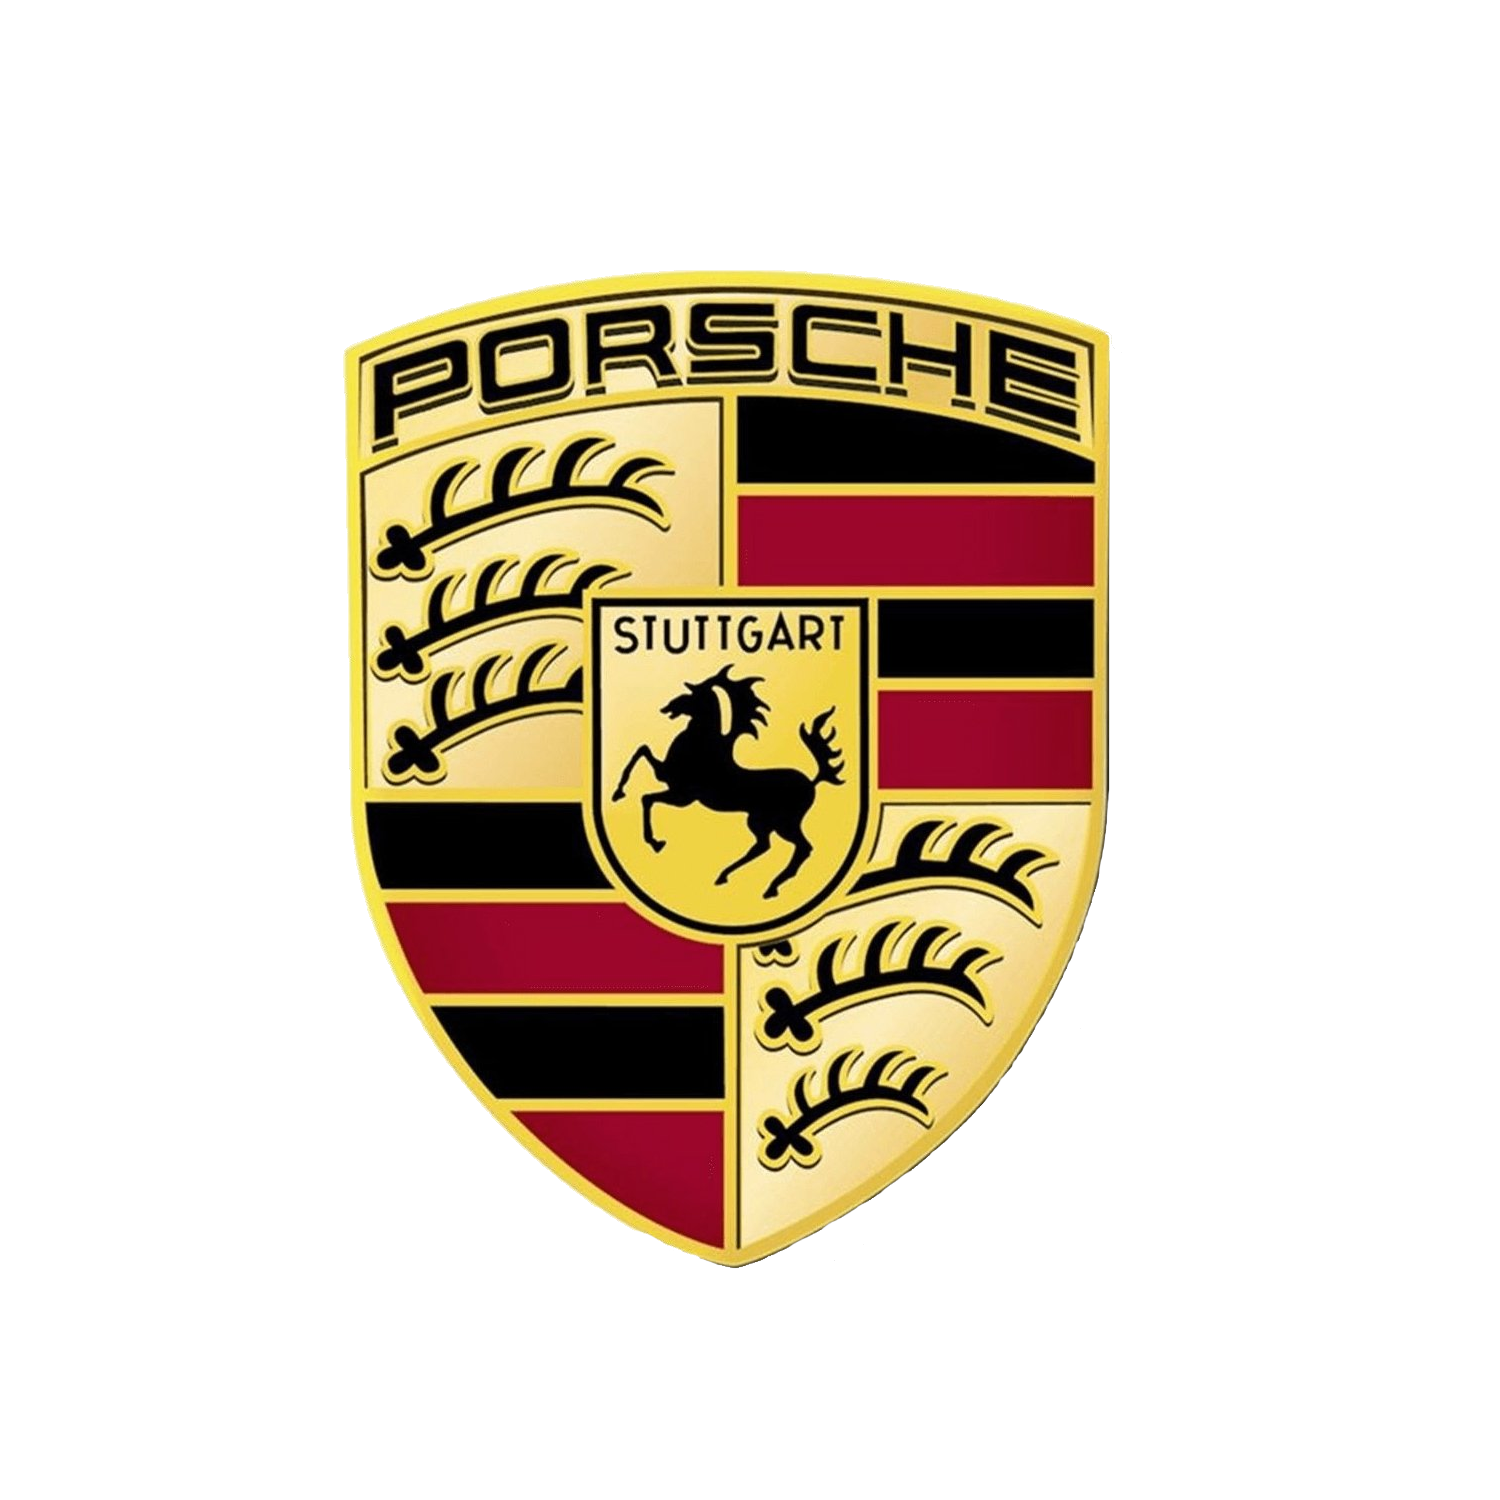 Porsche Parts Dealer - Porsche Parts Online